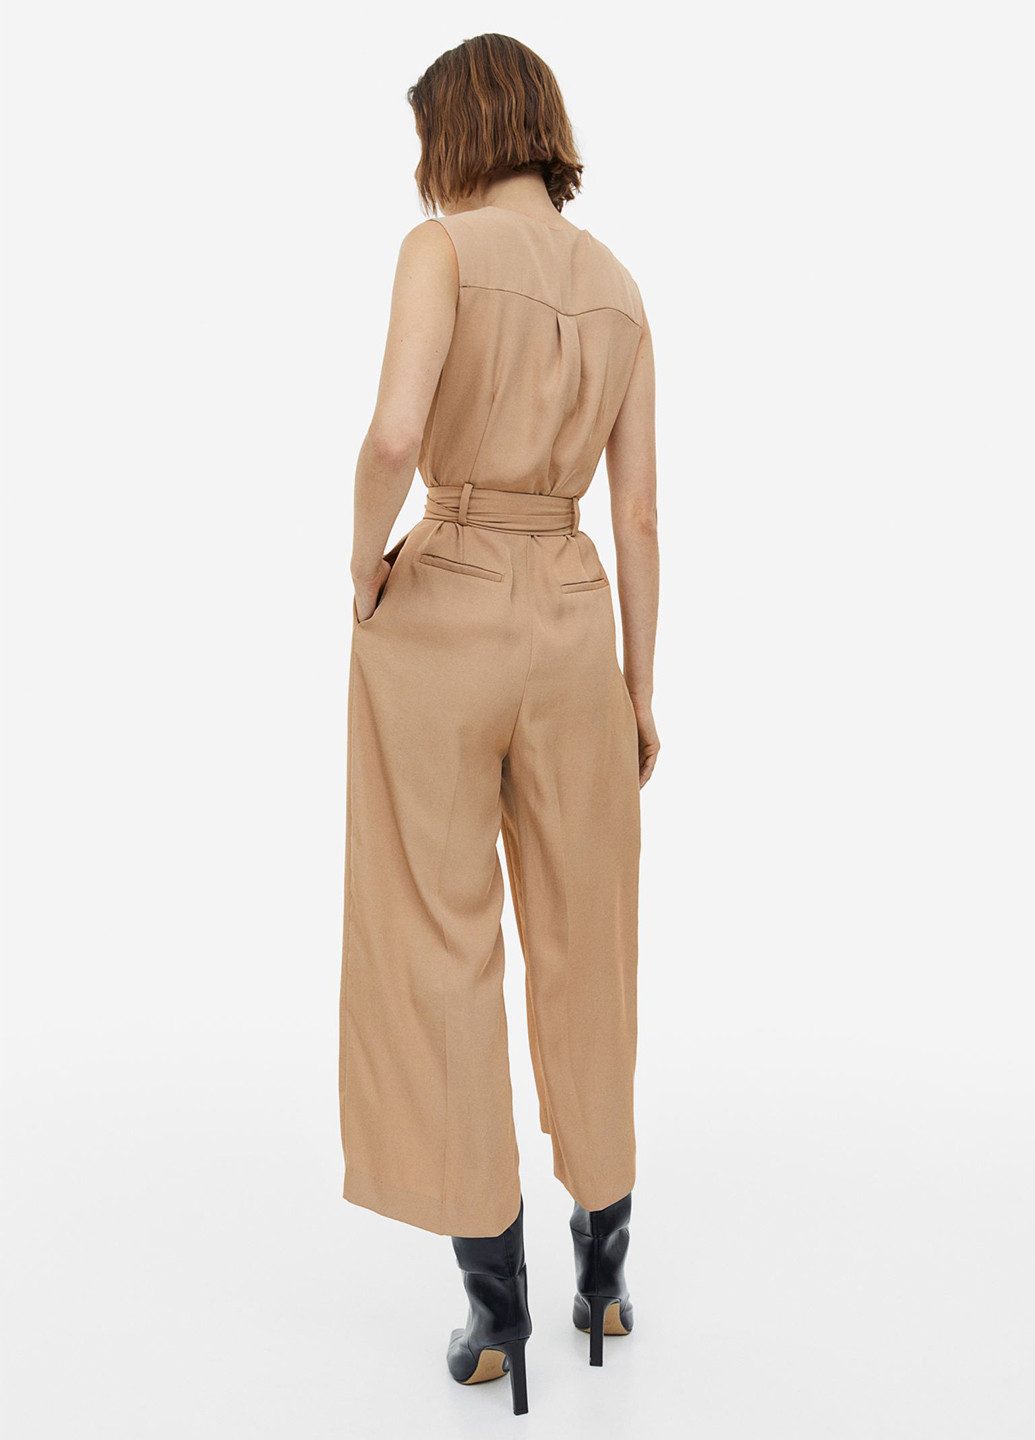 Комбинезон H&M комбинезон-брюки однотонный бежевый кэжуал полиэстер